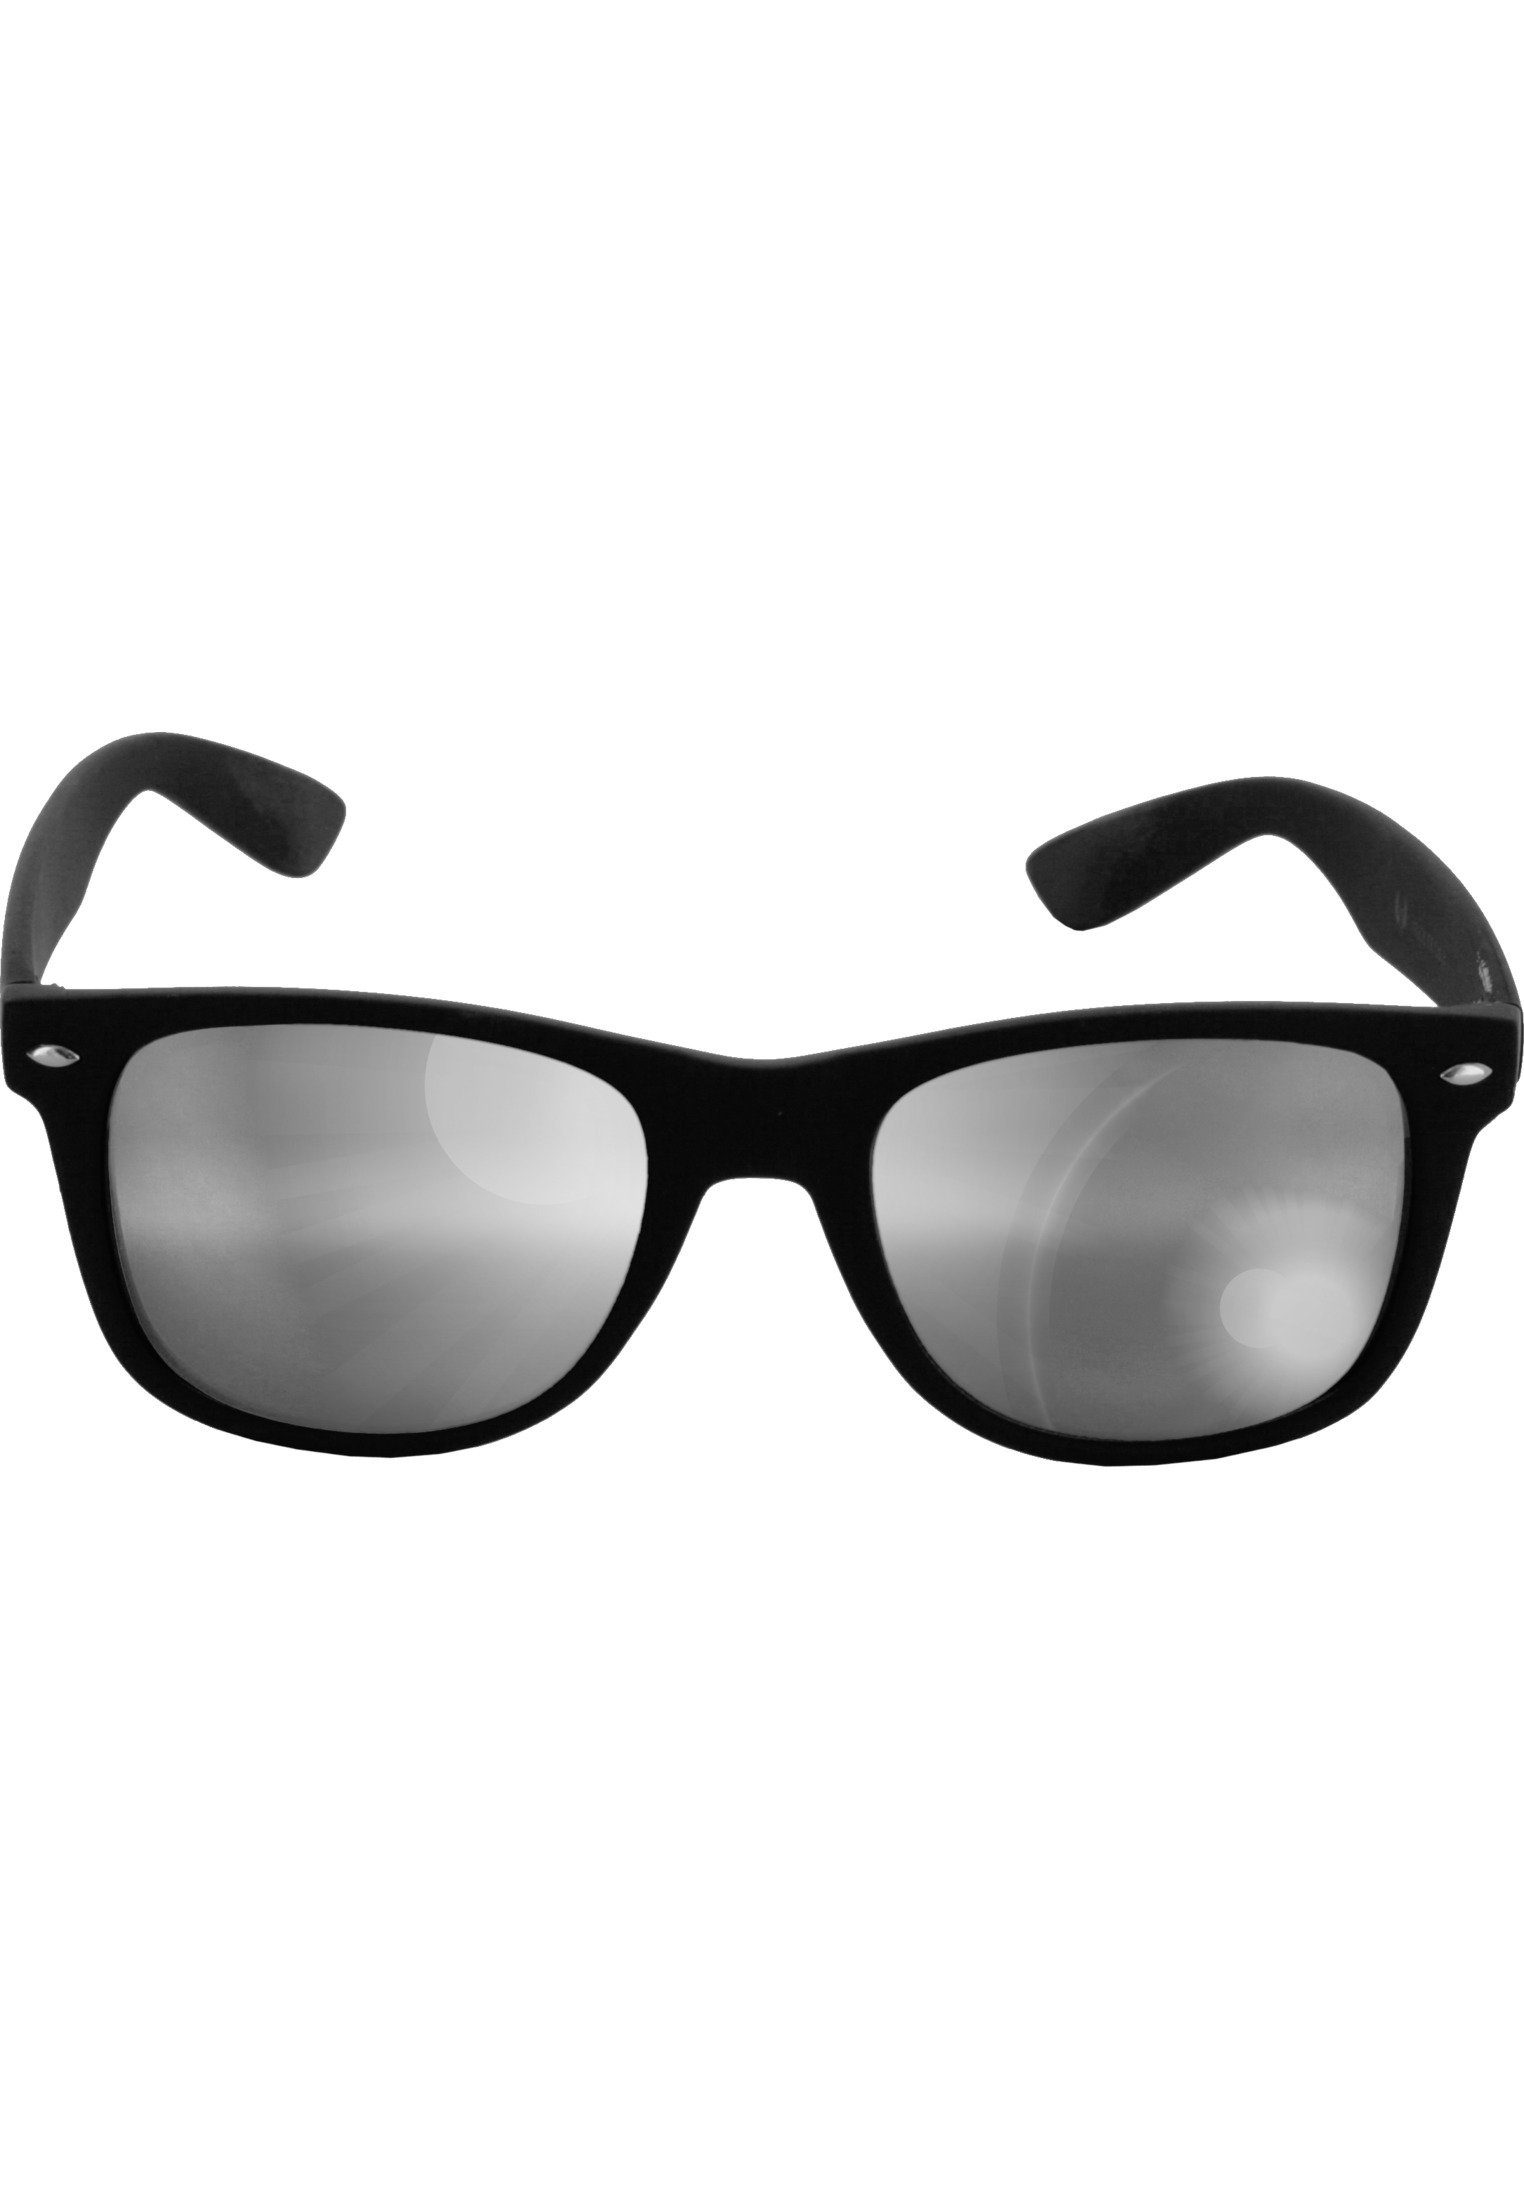 Sunglasses Accessoires Likoma Sonnenbrille MSTRDS blk/silver Mirror